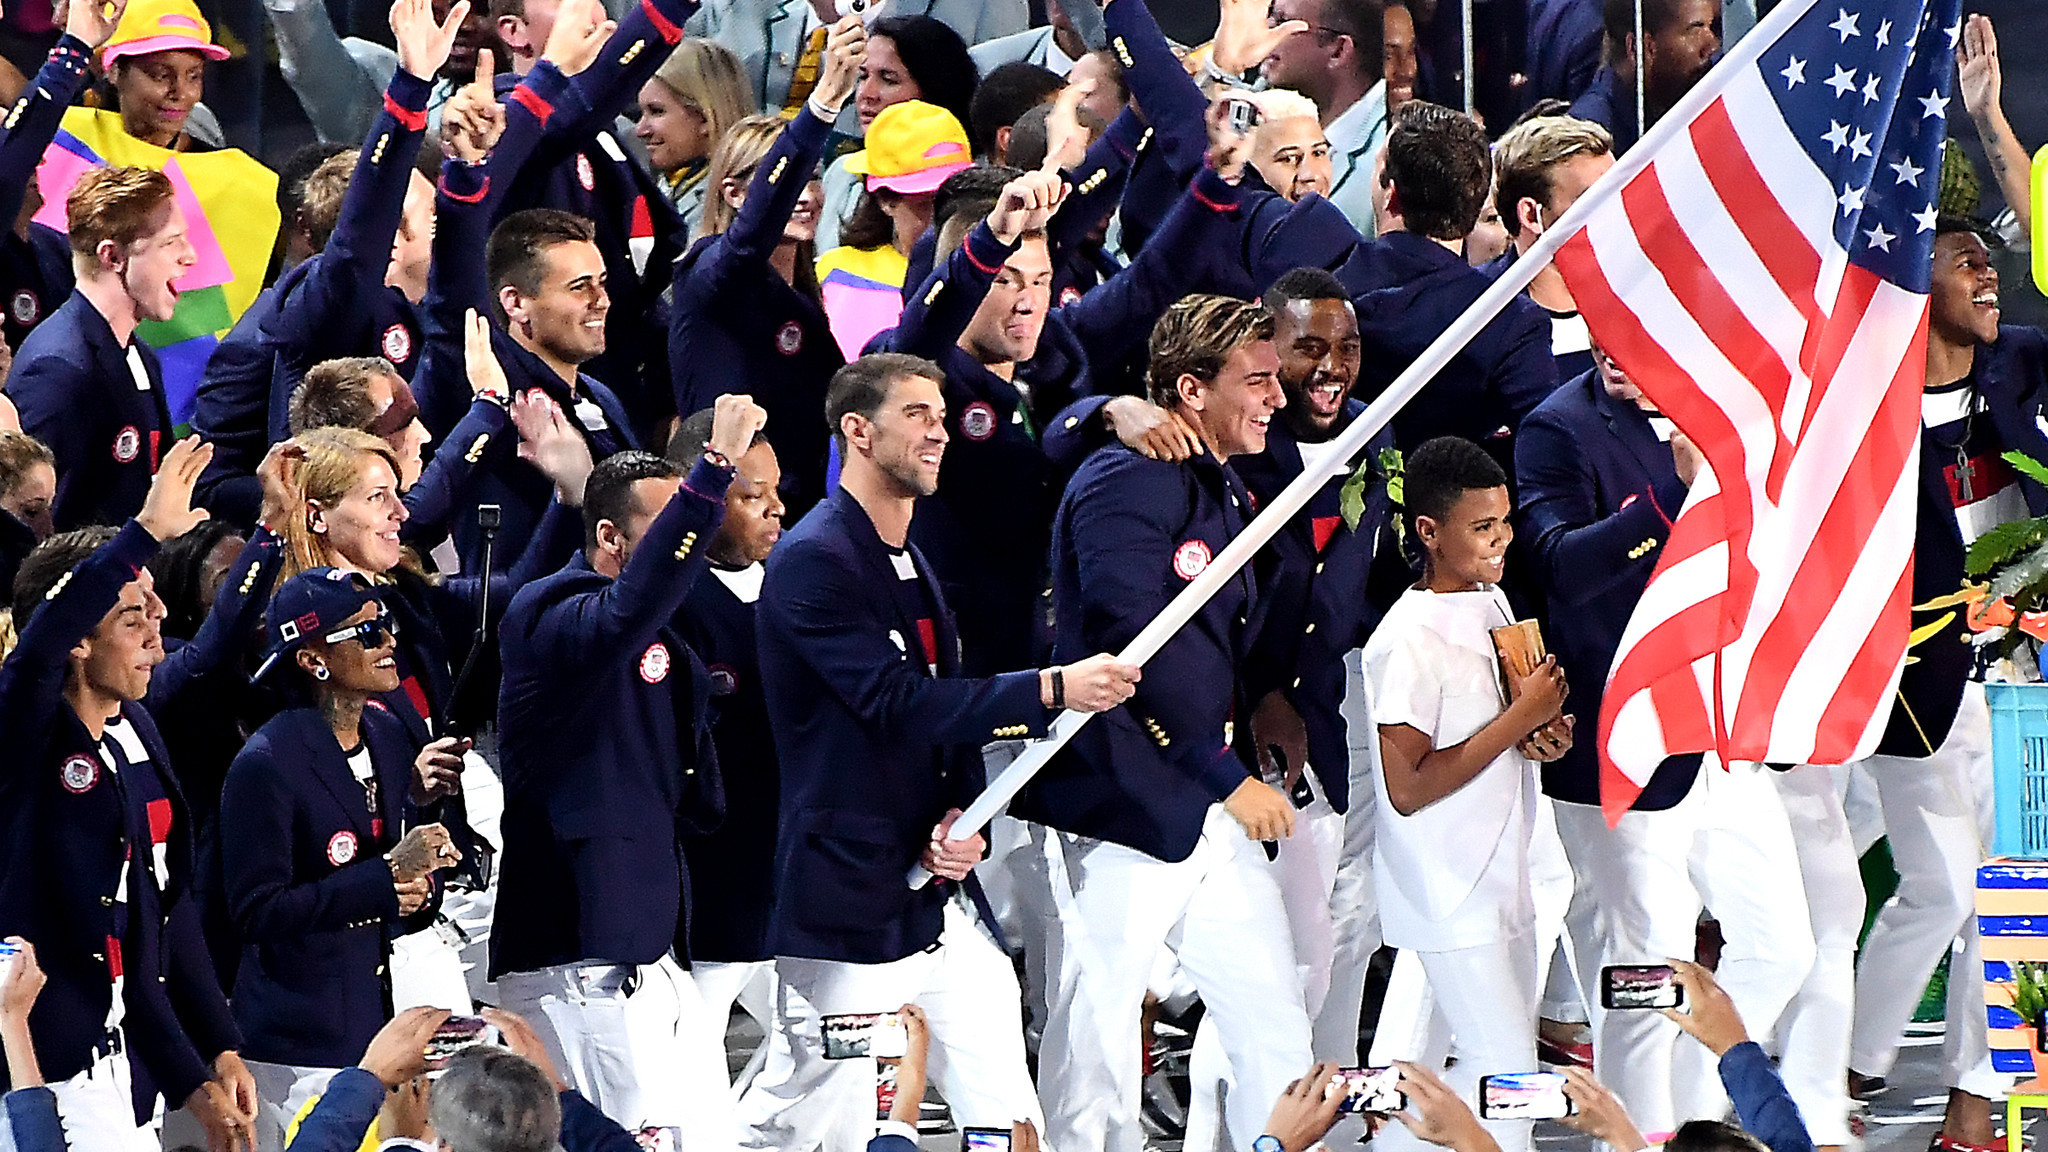 रियो ओलम्पिक (पदक तालिका) : 24 स्वर्ण पदकों के साथ शीर्ष पर अमेरिका 1